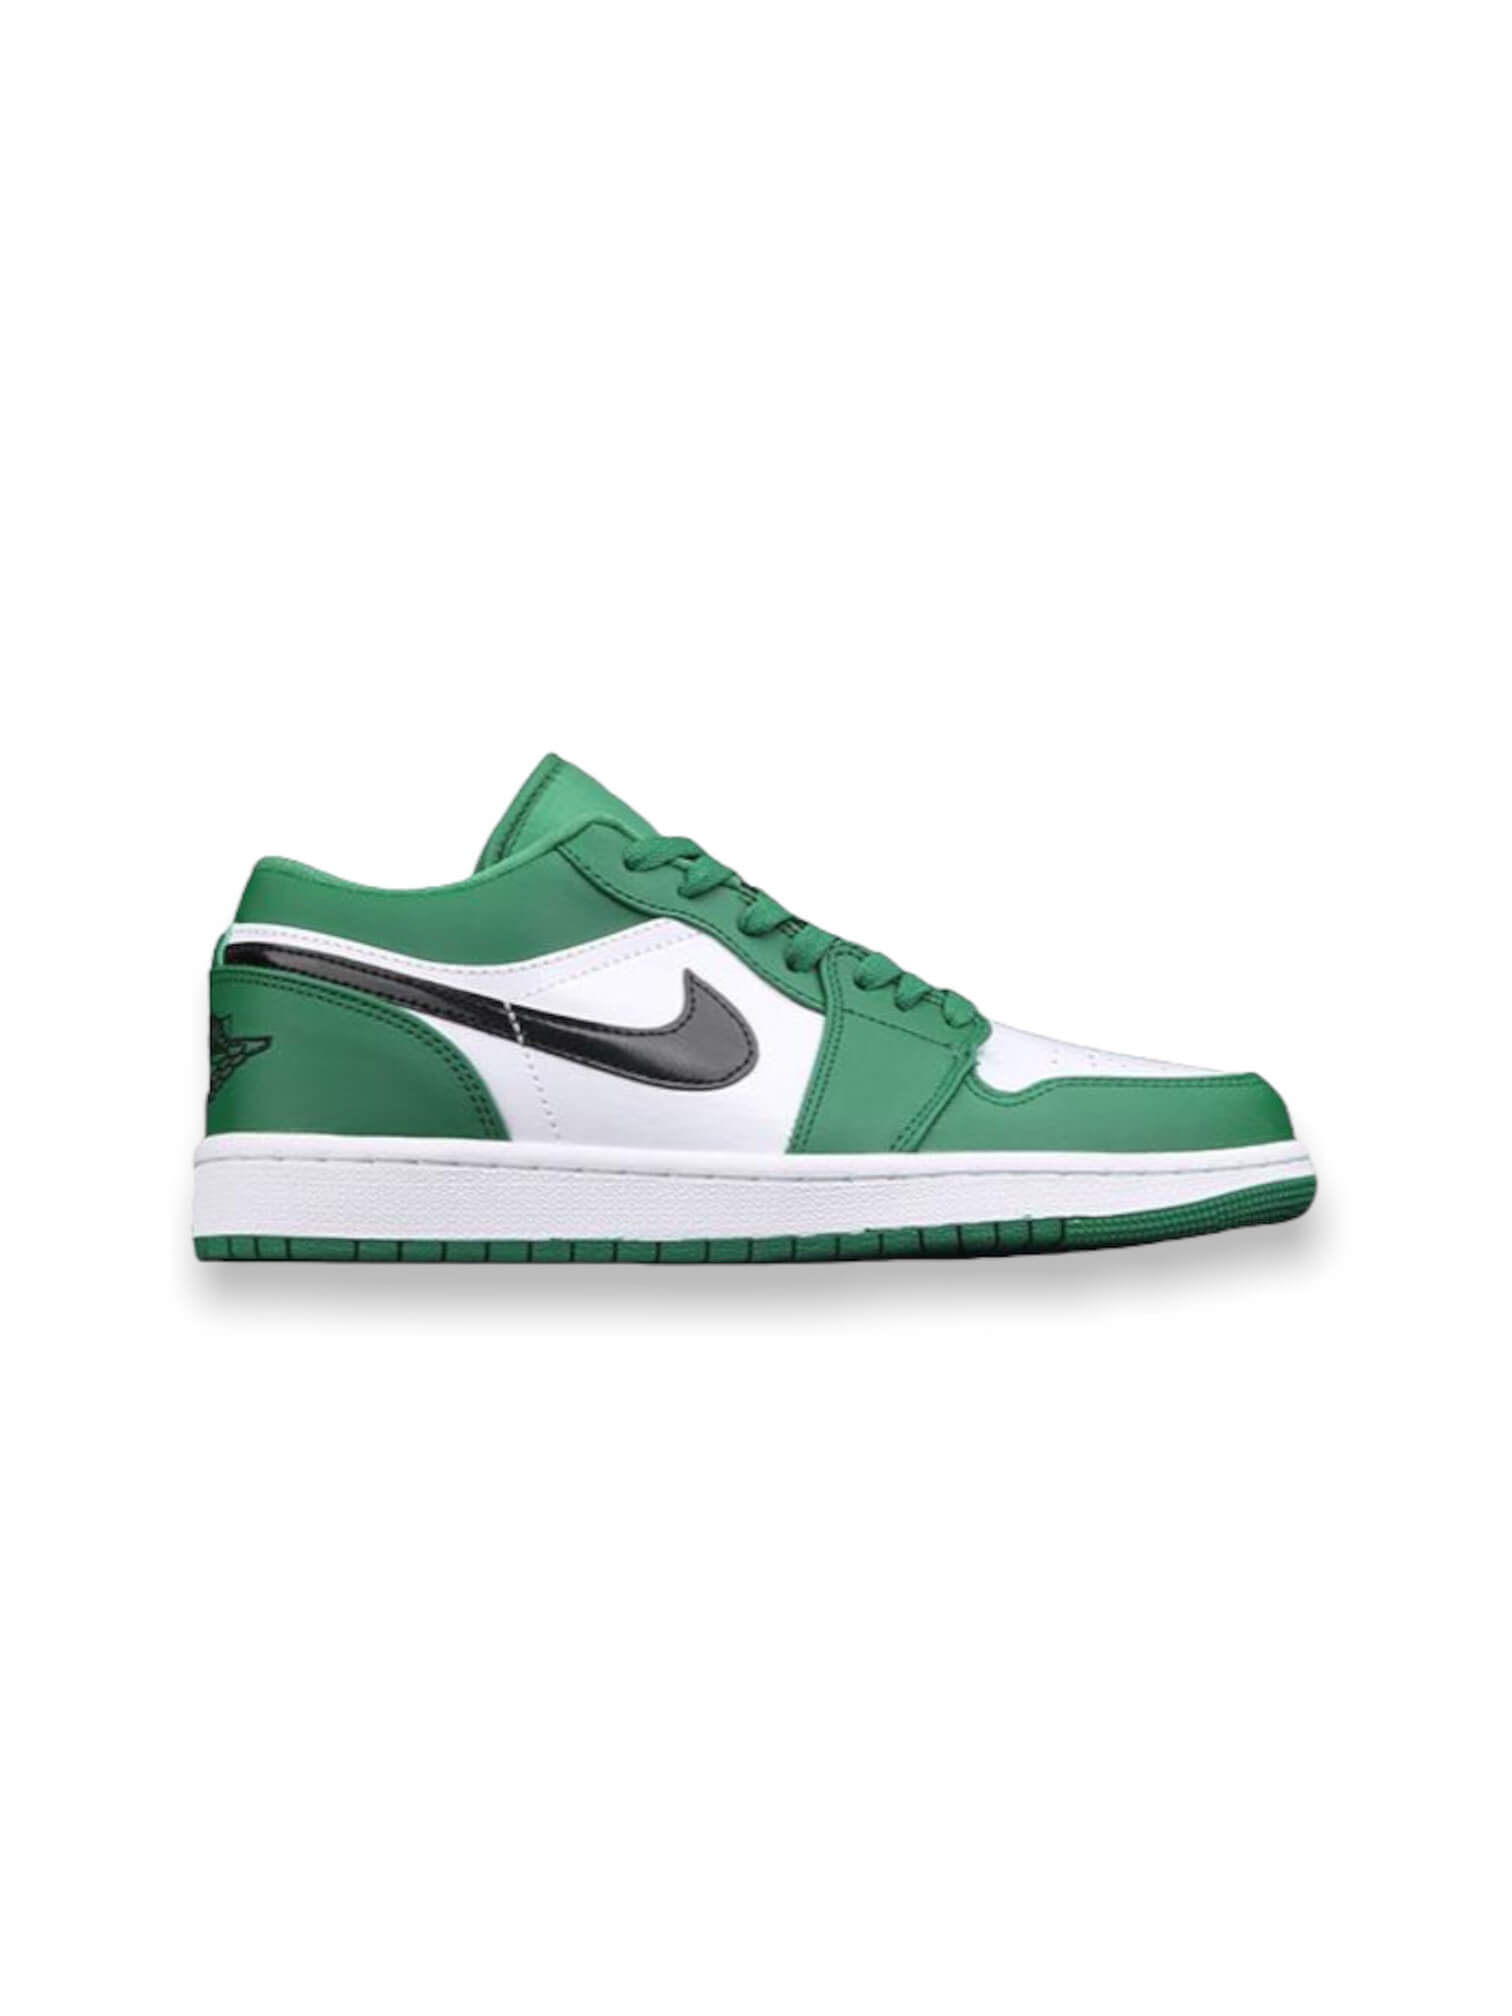 Jordan Xanh Lá - Nike Air Jordan 1 Low Pine Green